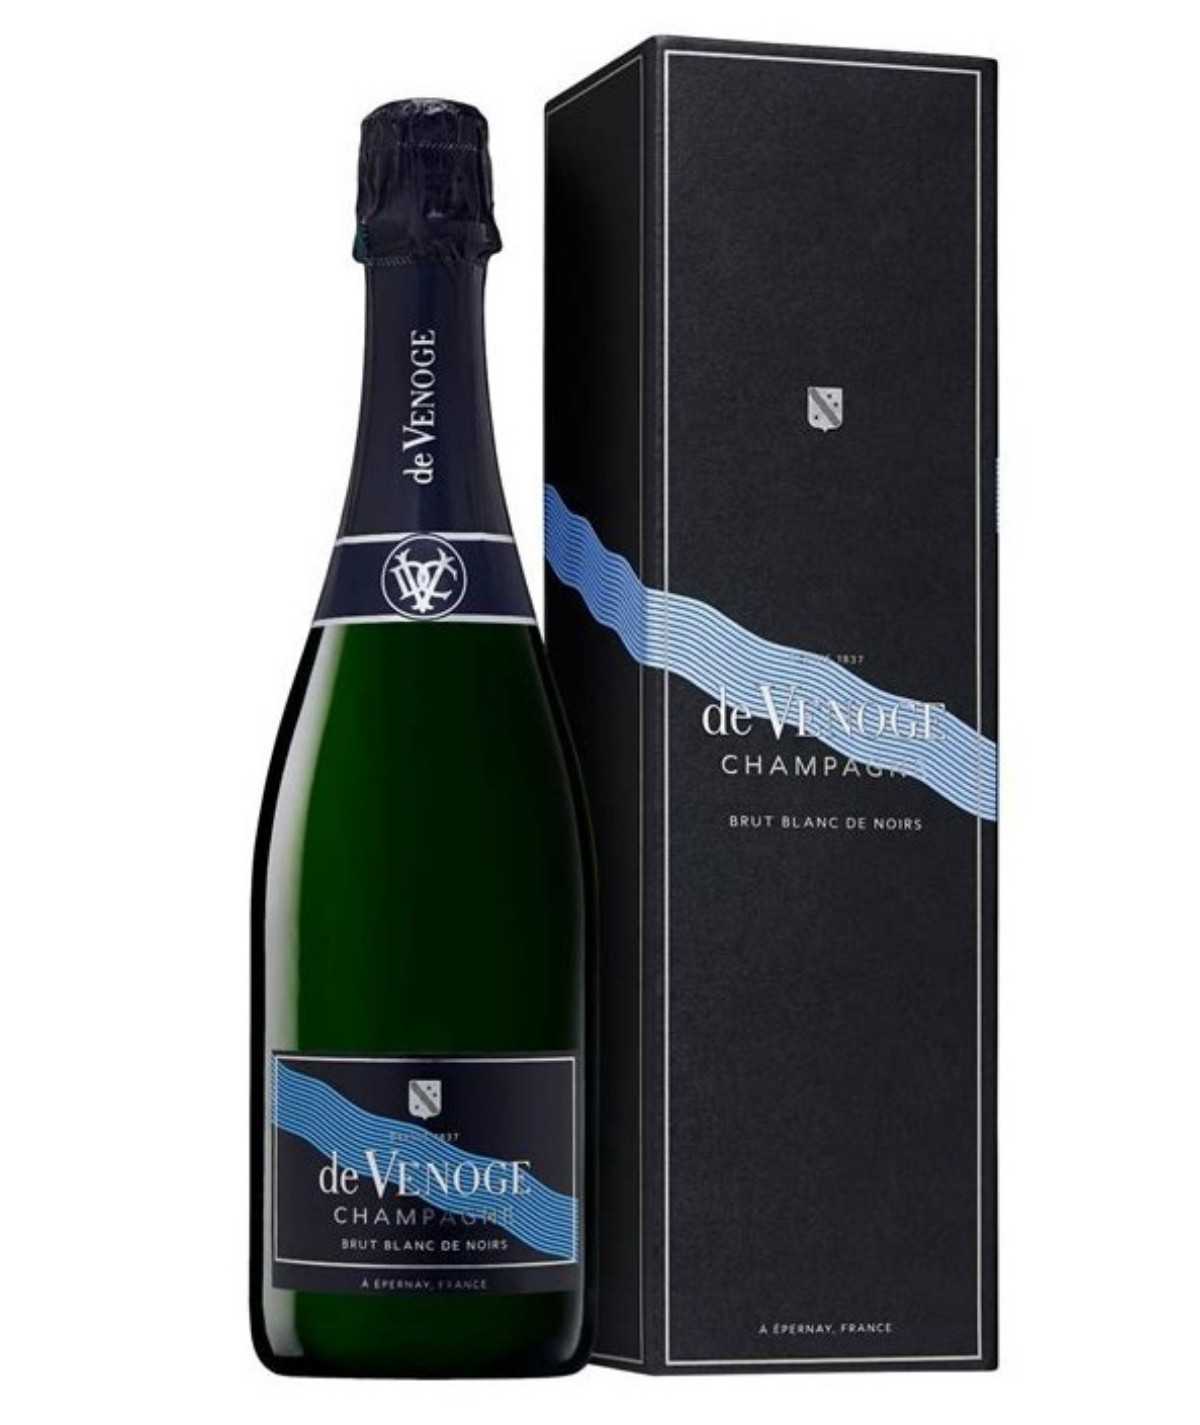 DE VENOGE Cordon Bleu Blanc De Noirs Premier Cru Champagne